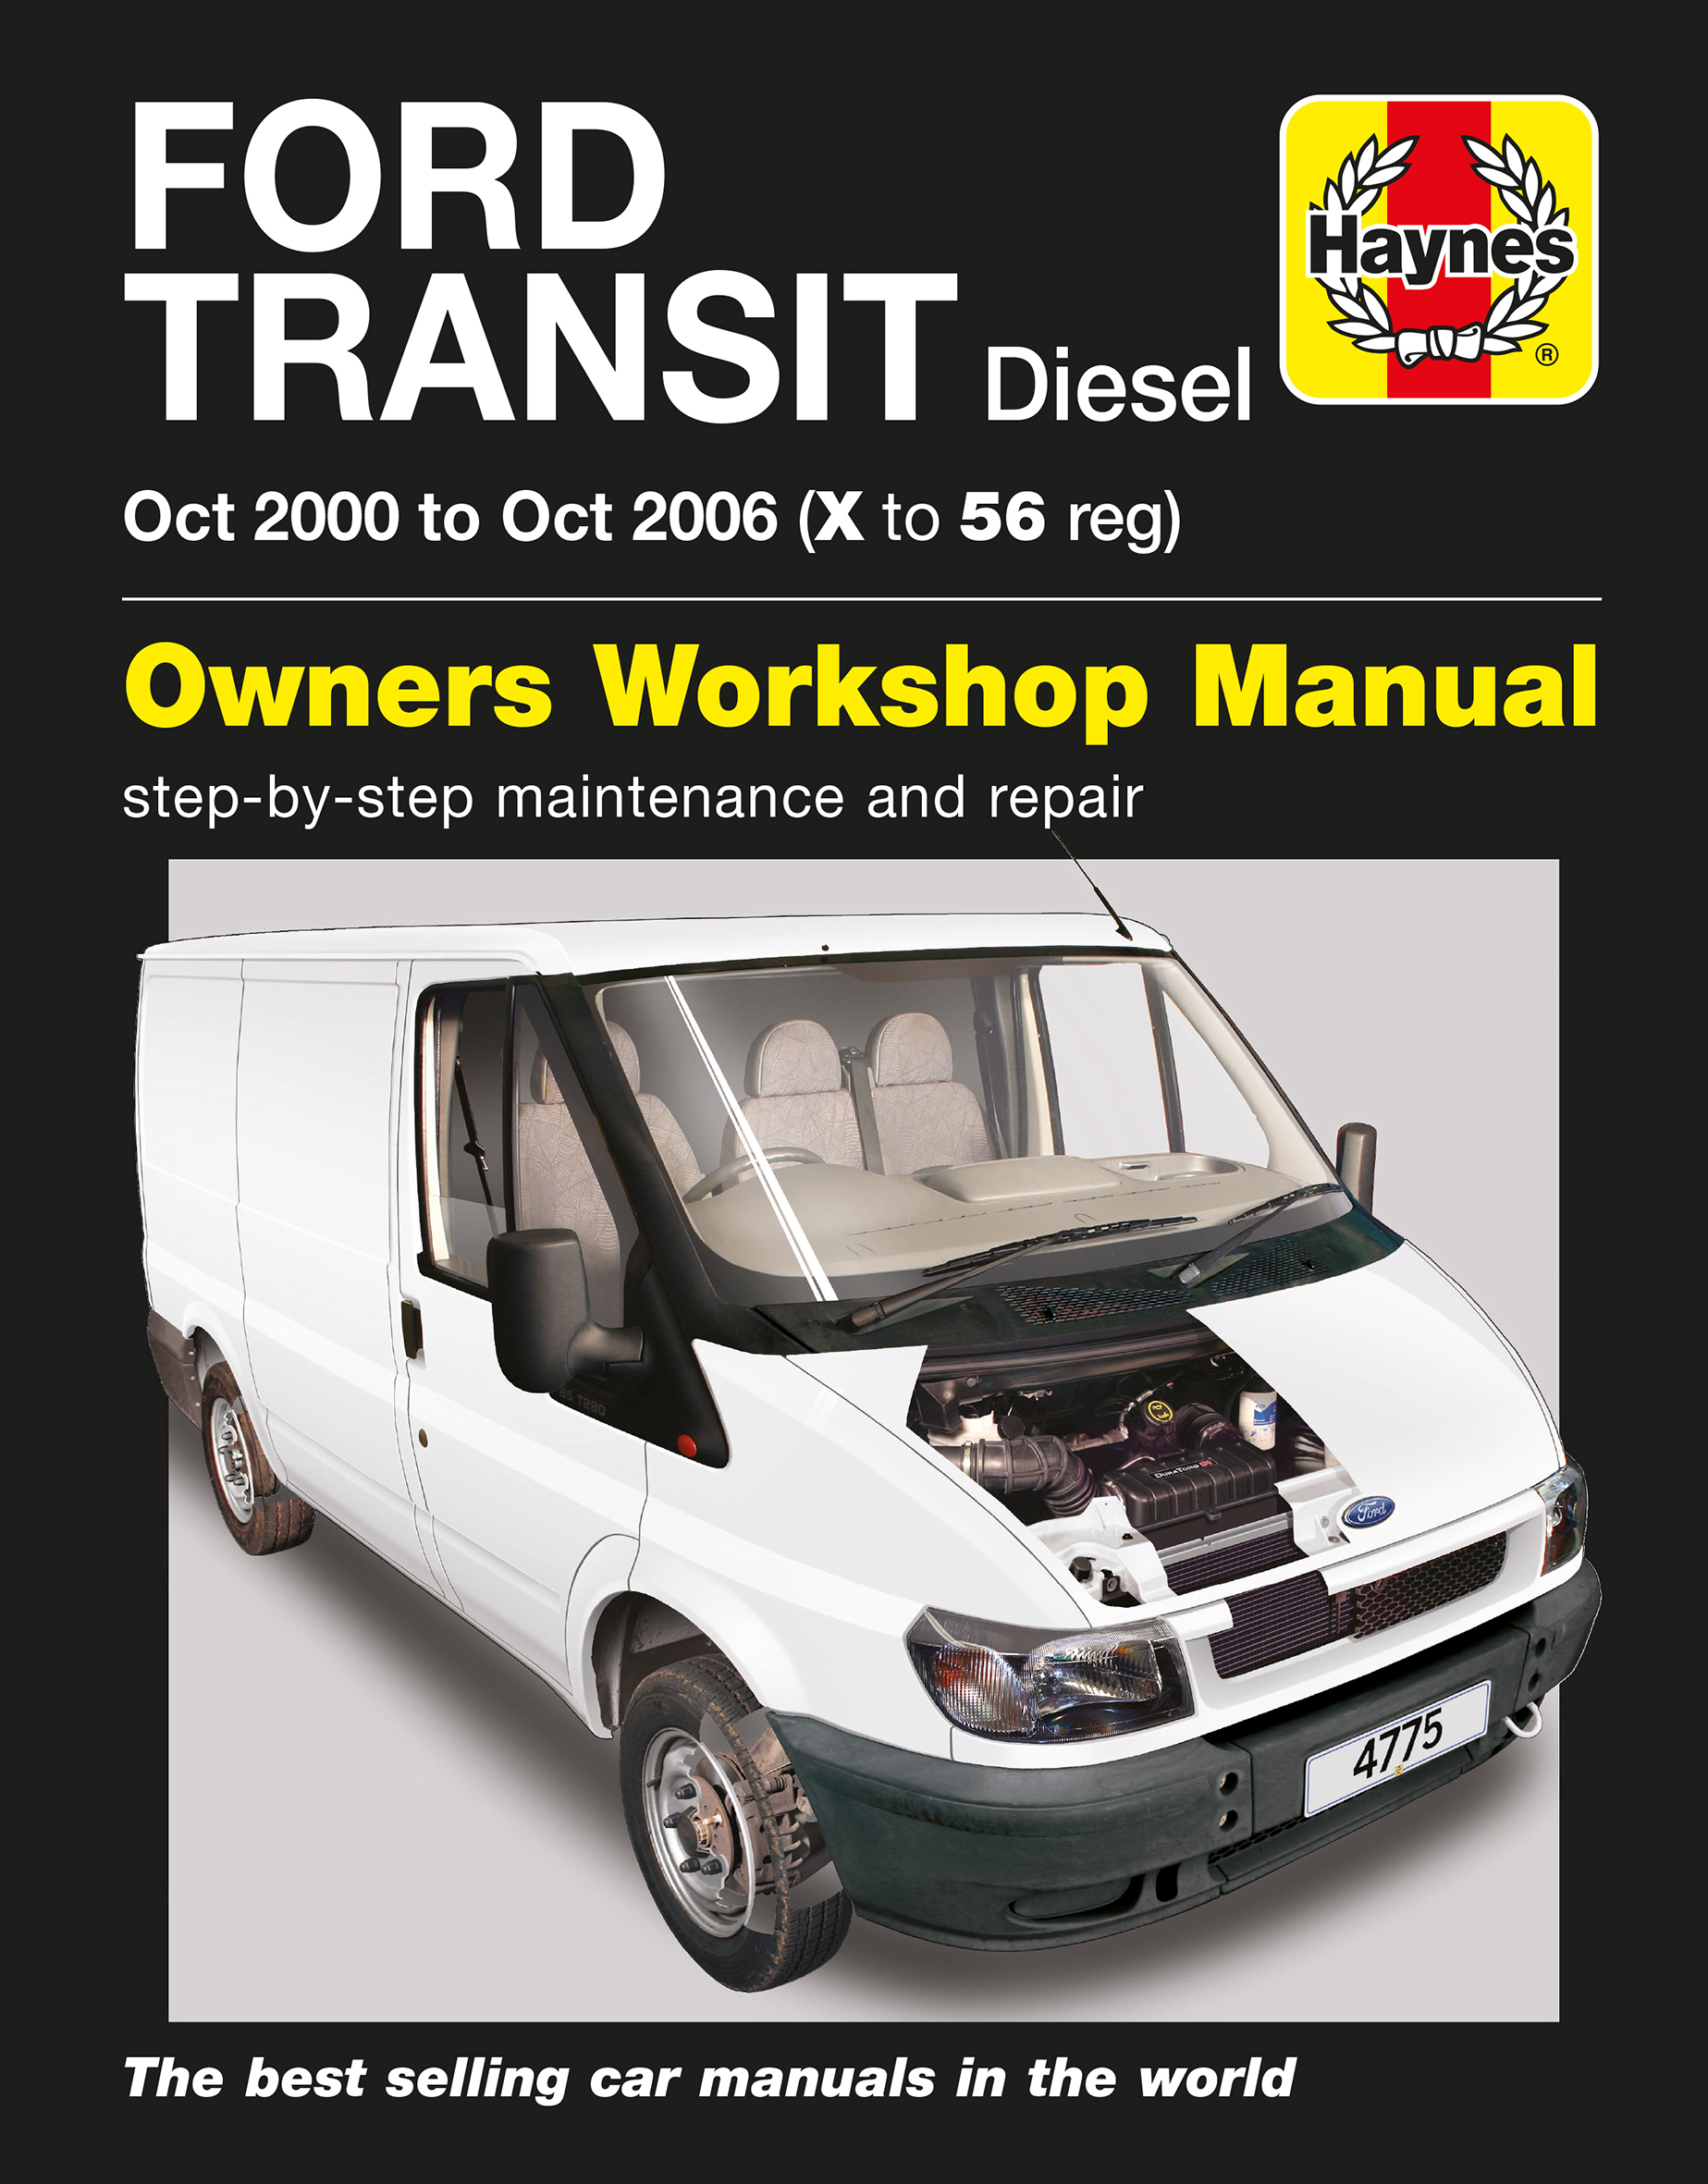 Ford Transit Connect Pdf Download Repair Manual Hsynes cleverjh